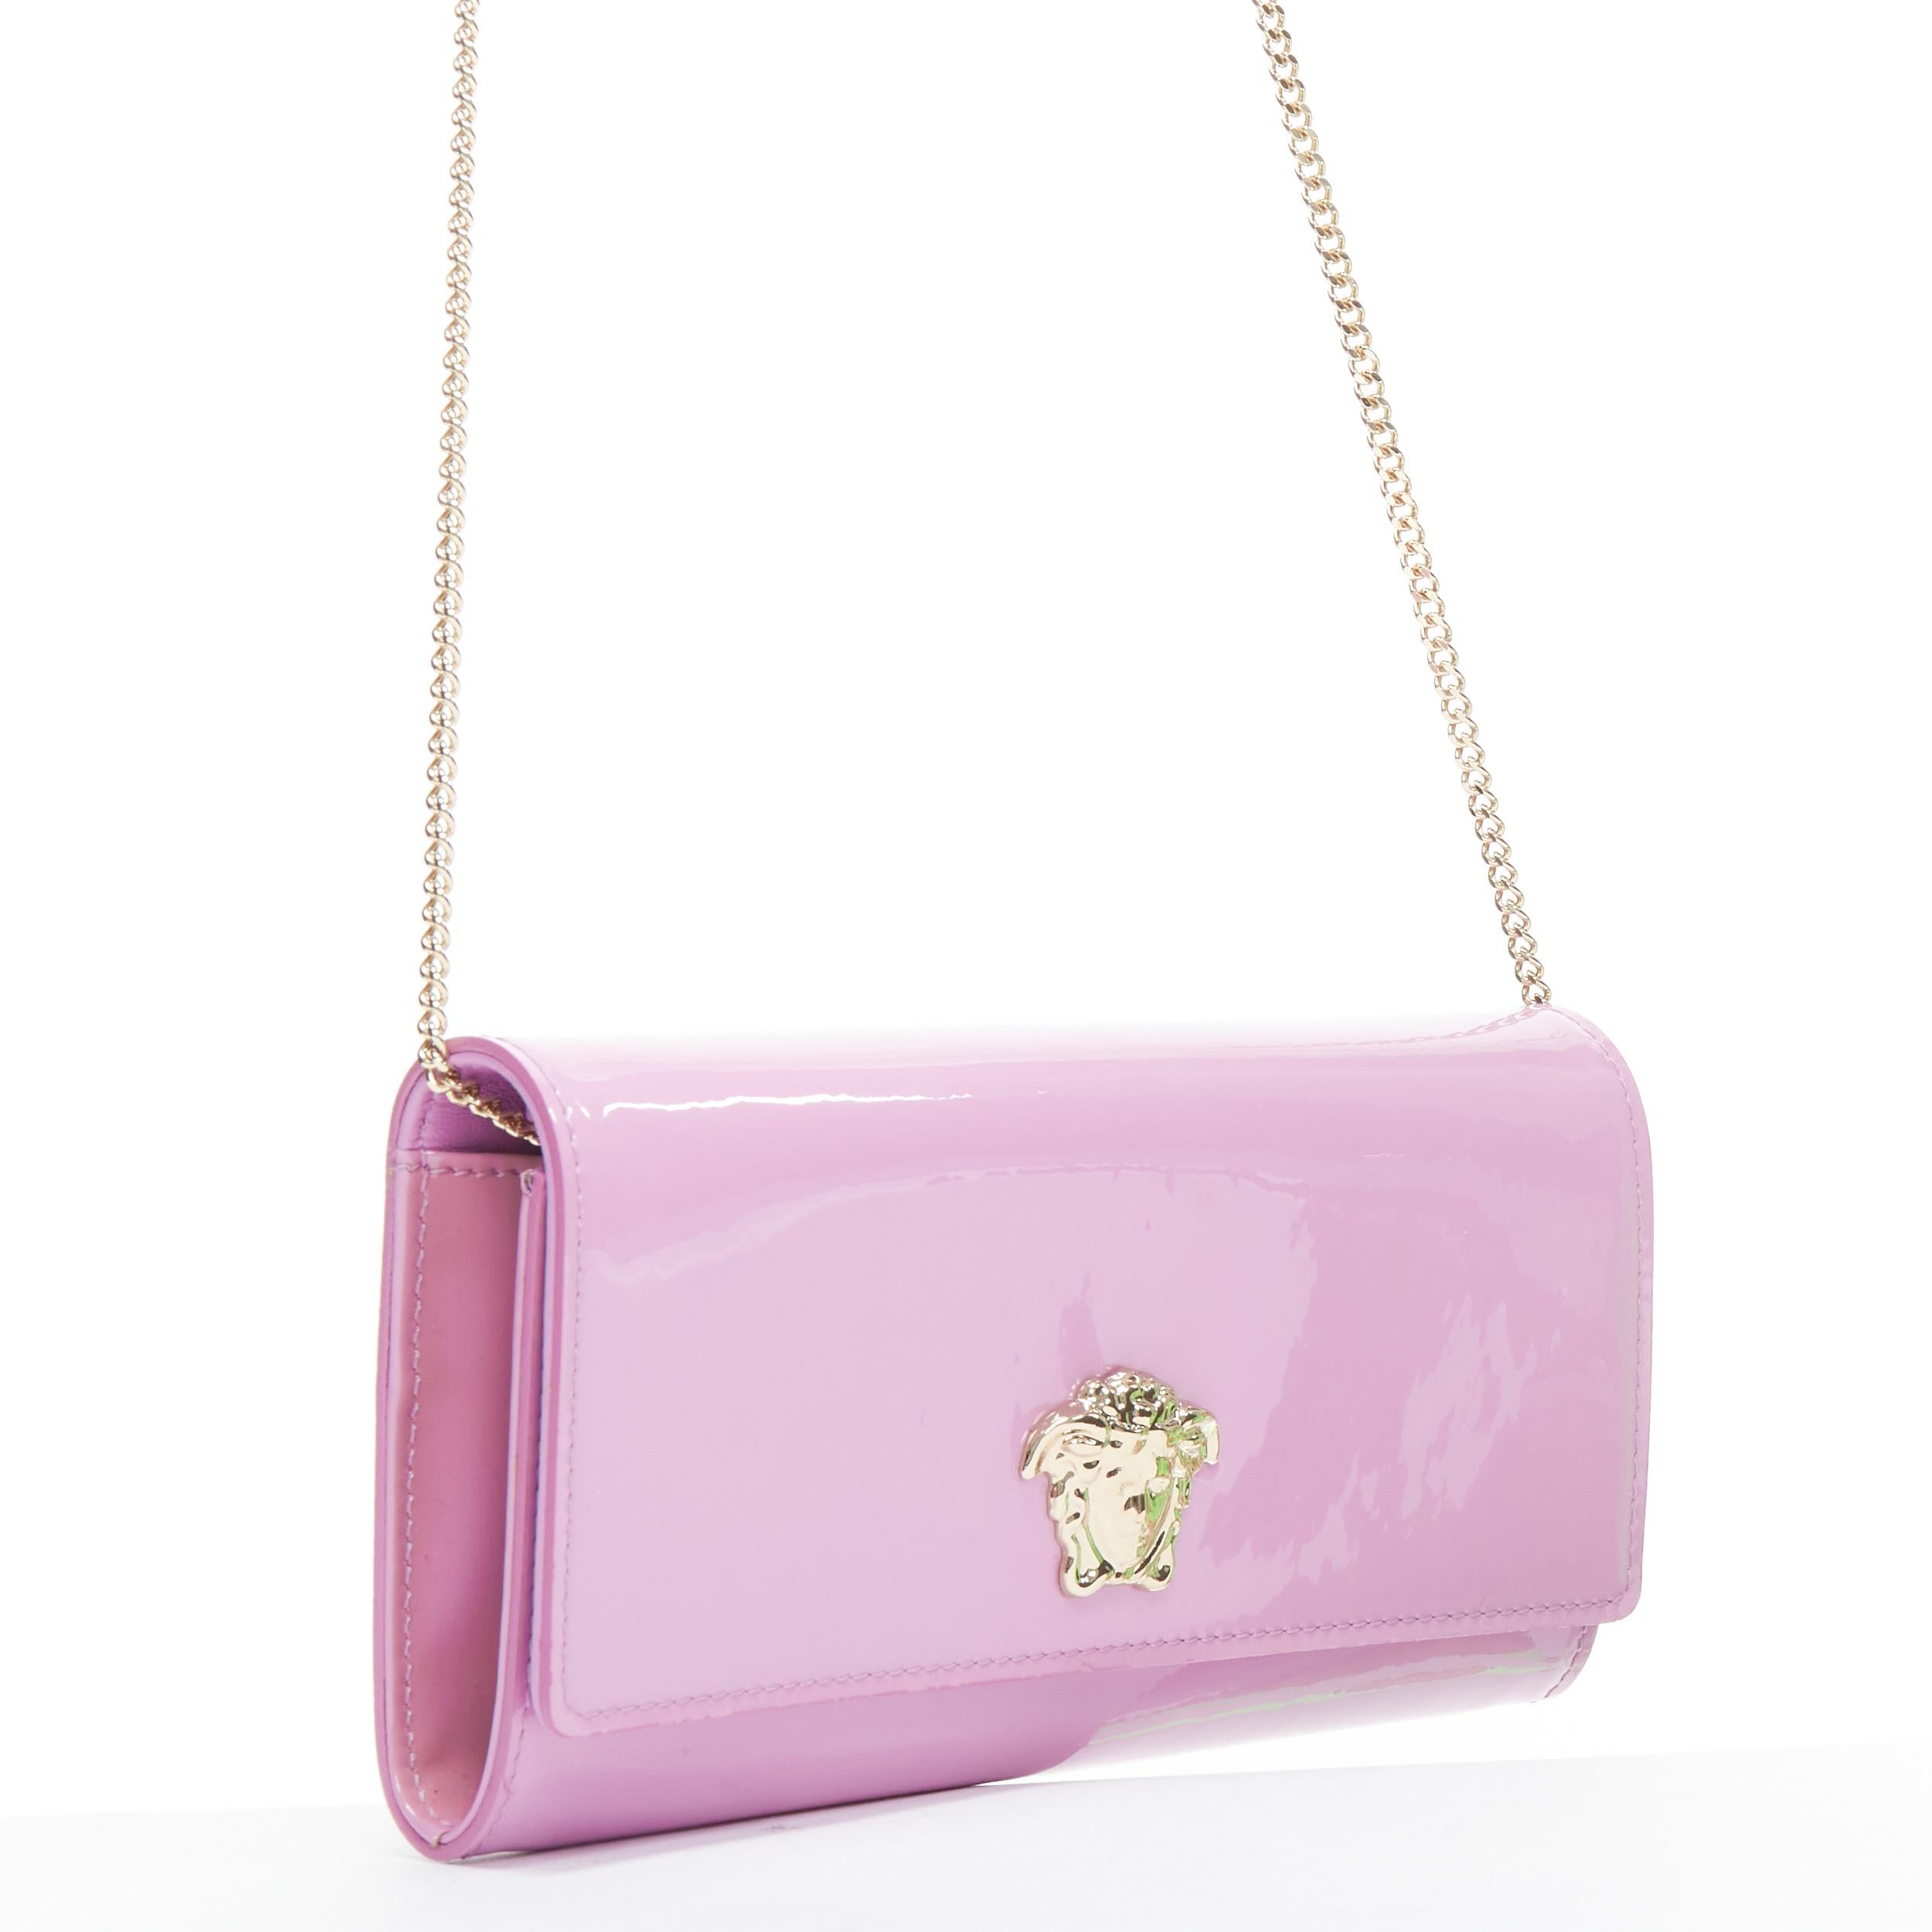 Pink new VERSACE Palazzo Medusa lilac purple patent gold wallet chain crossbody bag